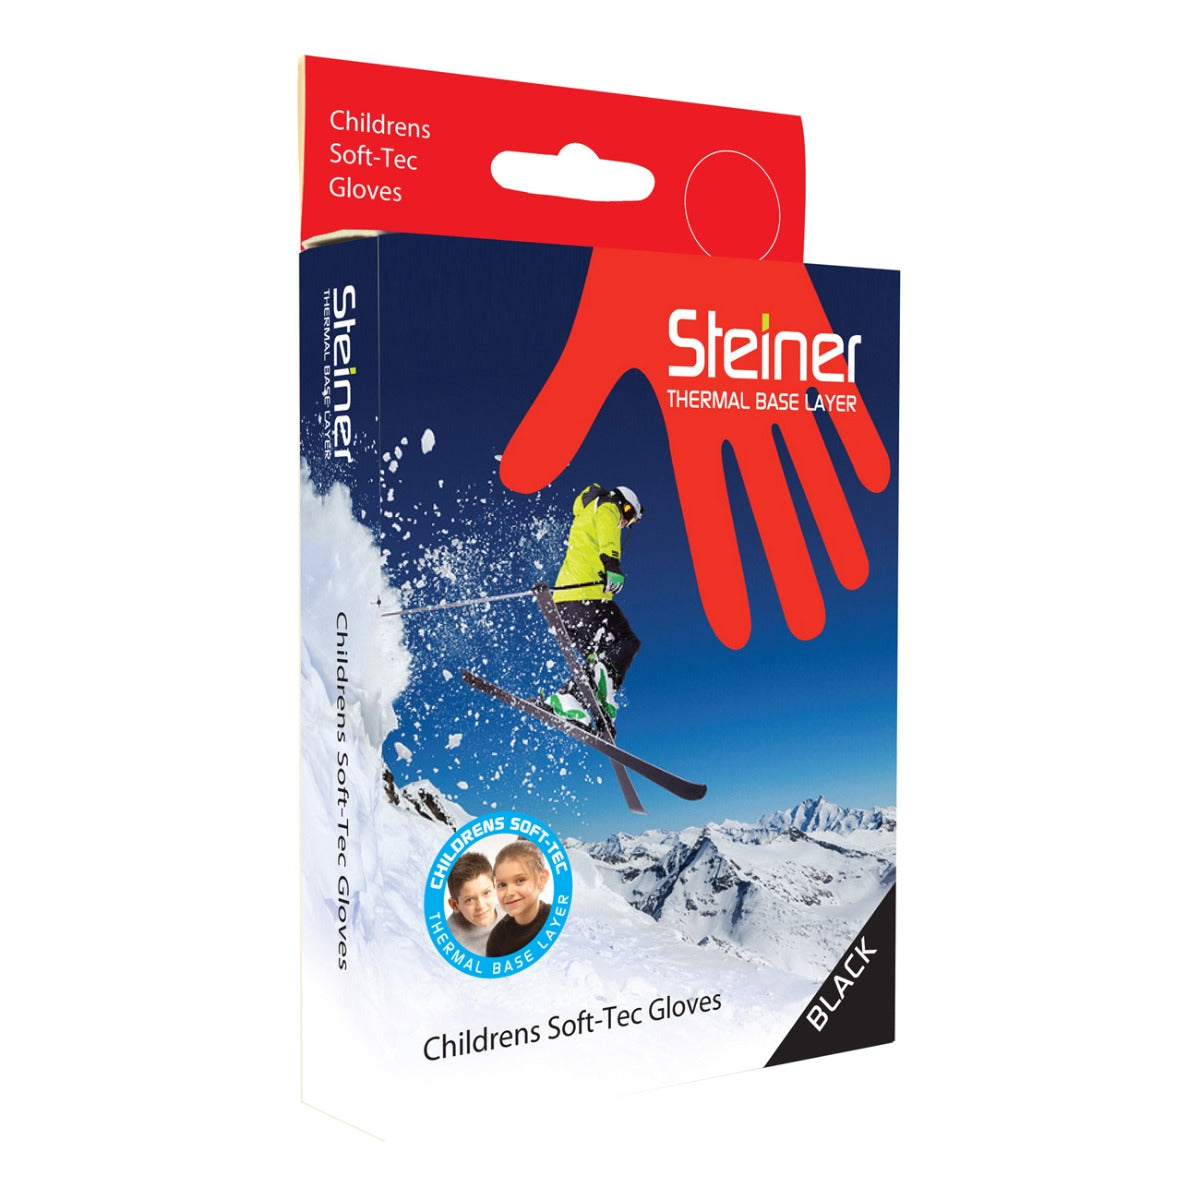 Steiner Childrens Soft-Tec Thermal Glove Liner